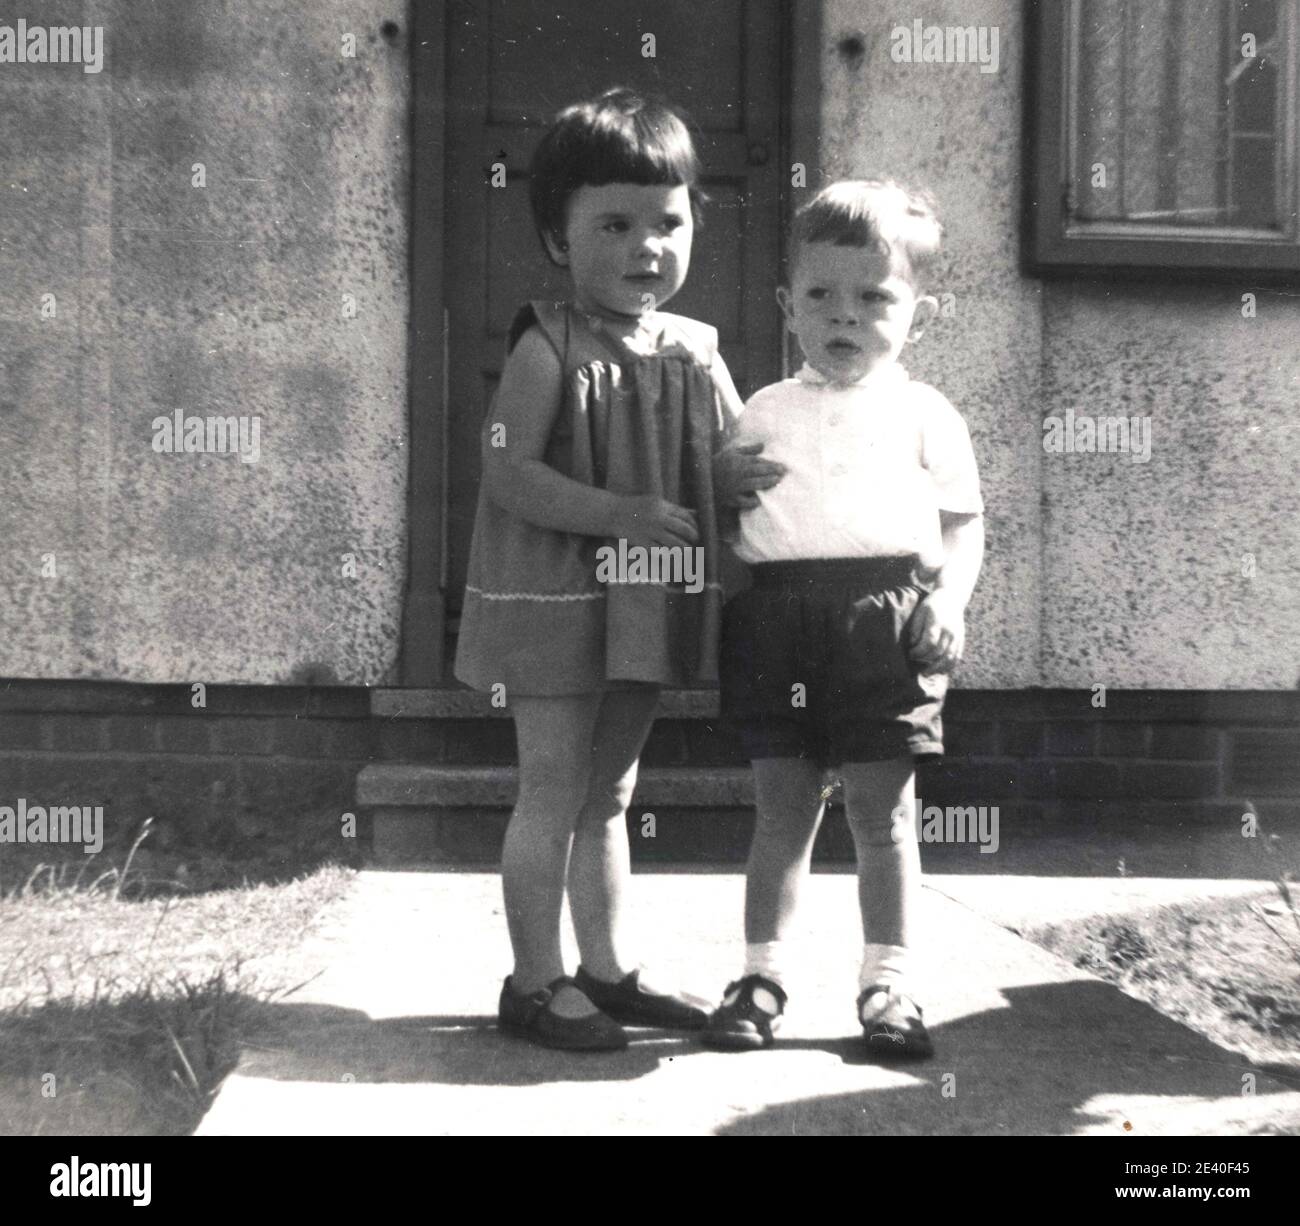 Girl and a boy outside prefsbricated house, Leeds, !960's Stock Photo